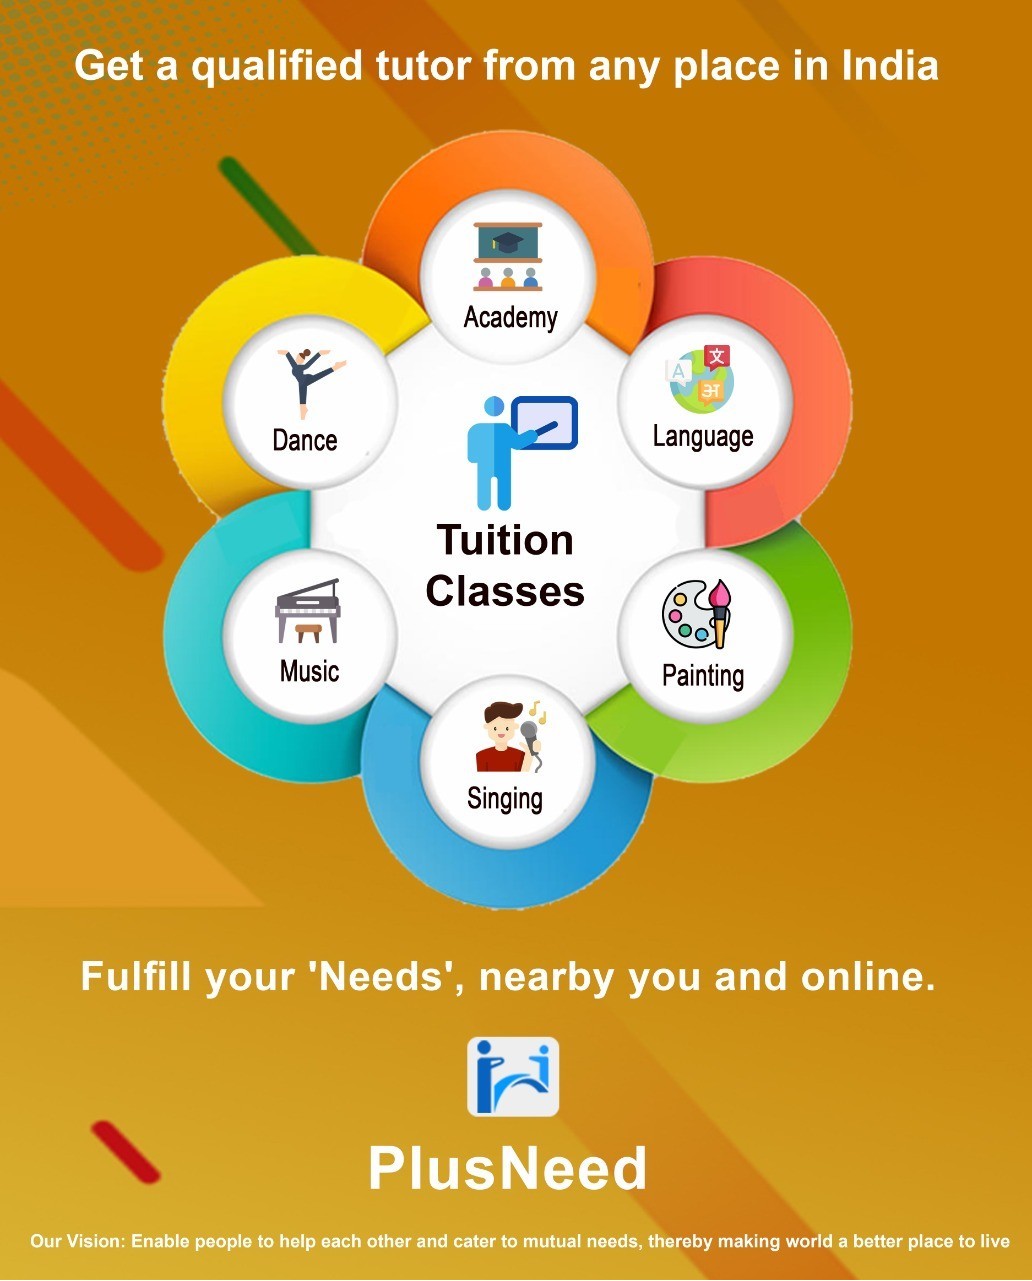 Get qualified online tutors on PlusNeed.